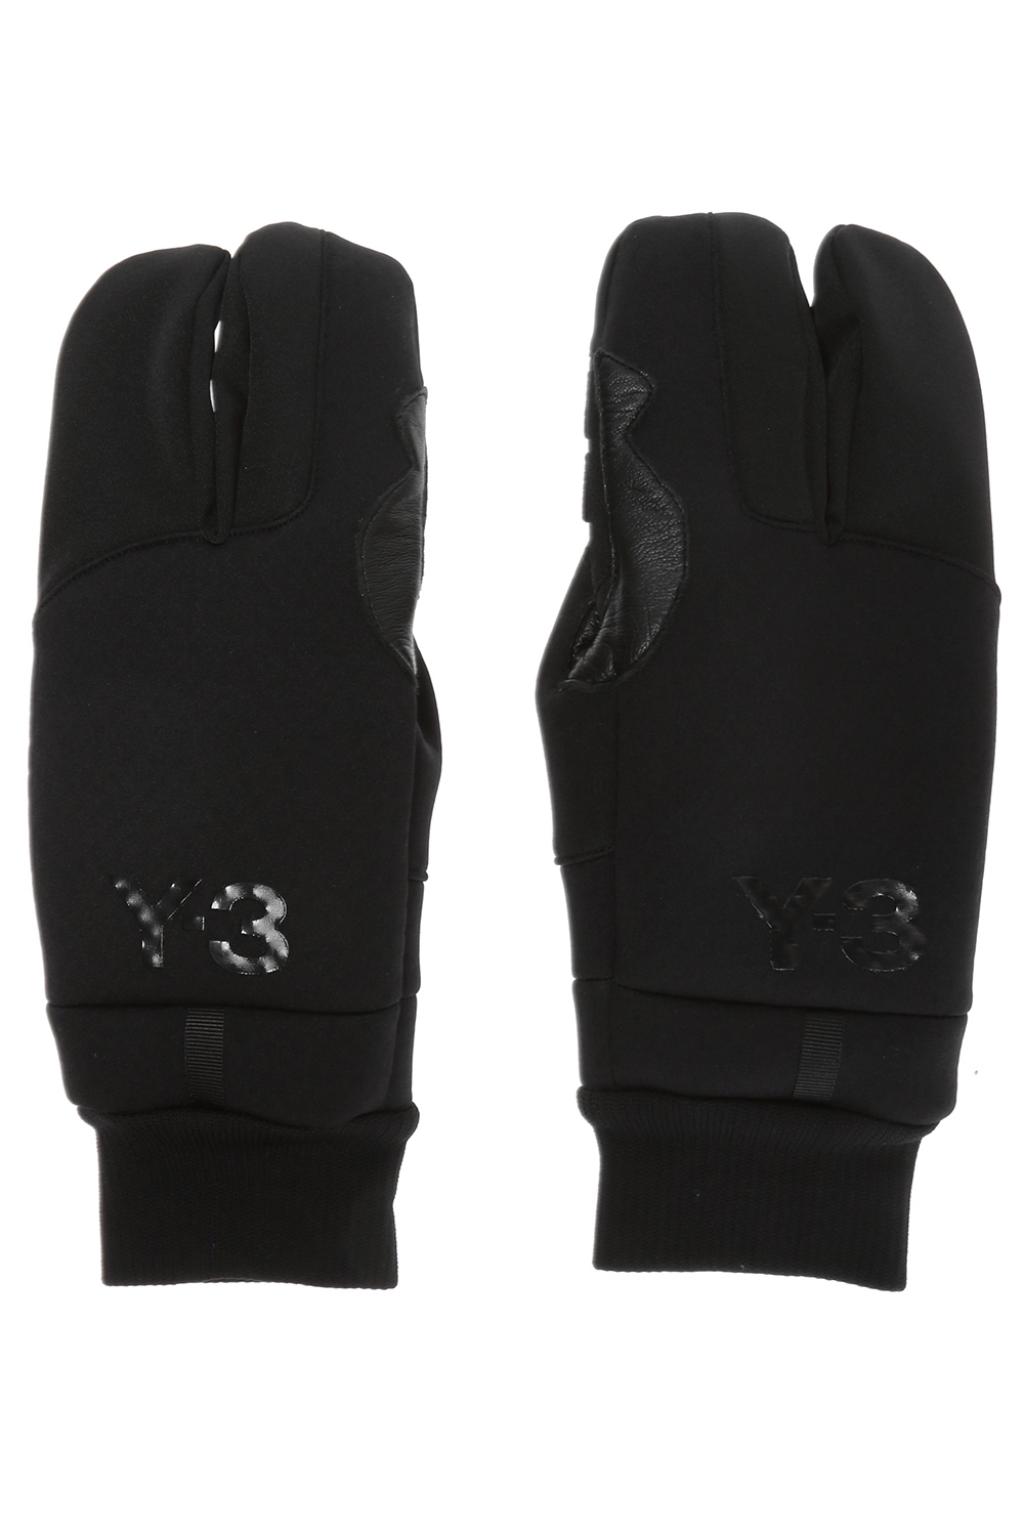 Y-3 Yohji Yamamoto Split shaped gloves | Men's Accessories | Vitkac